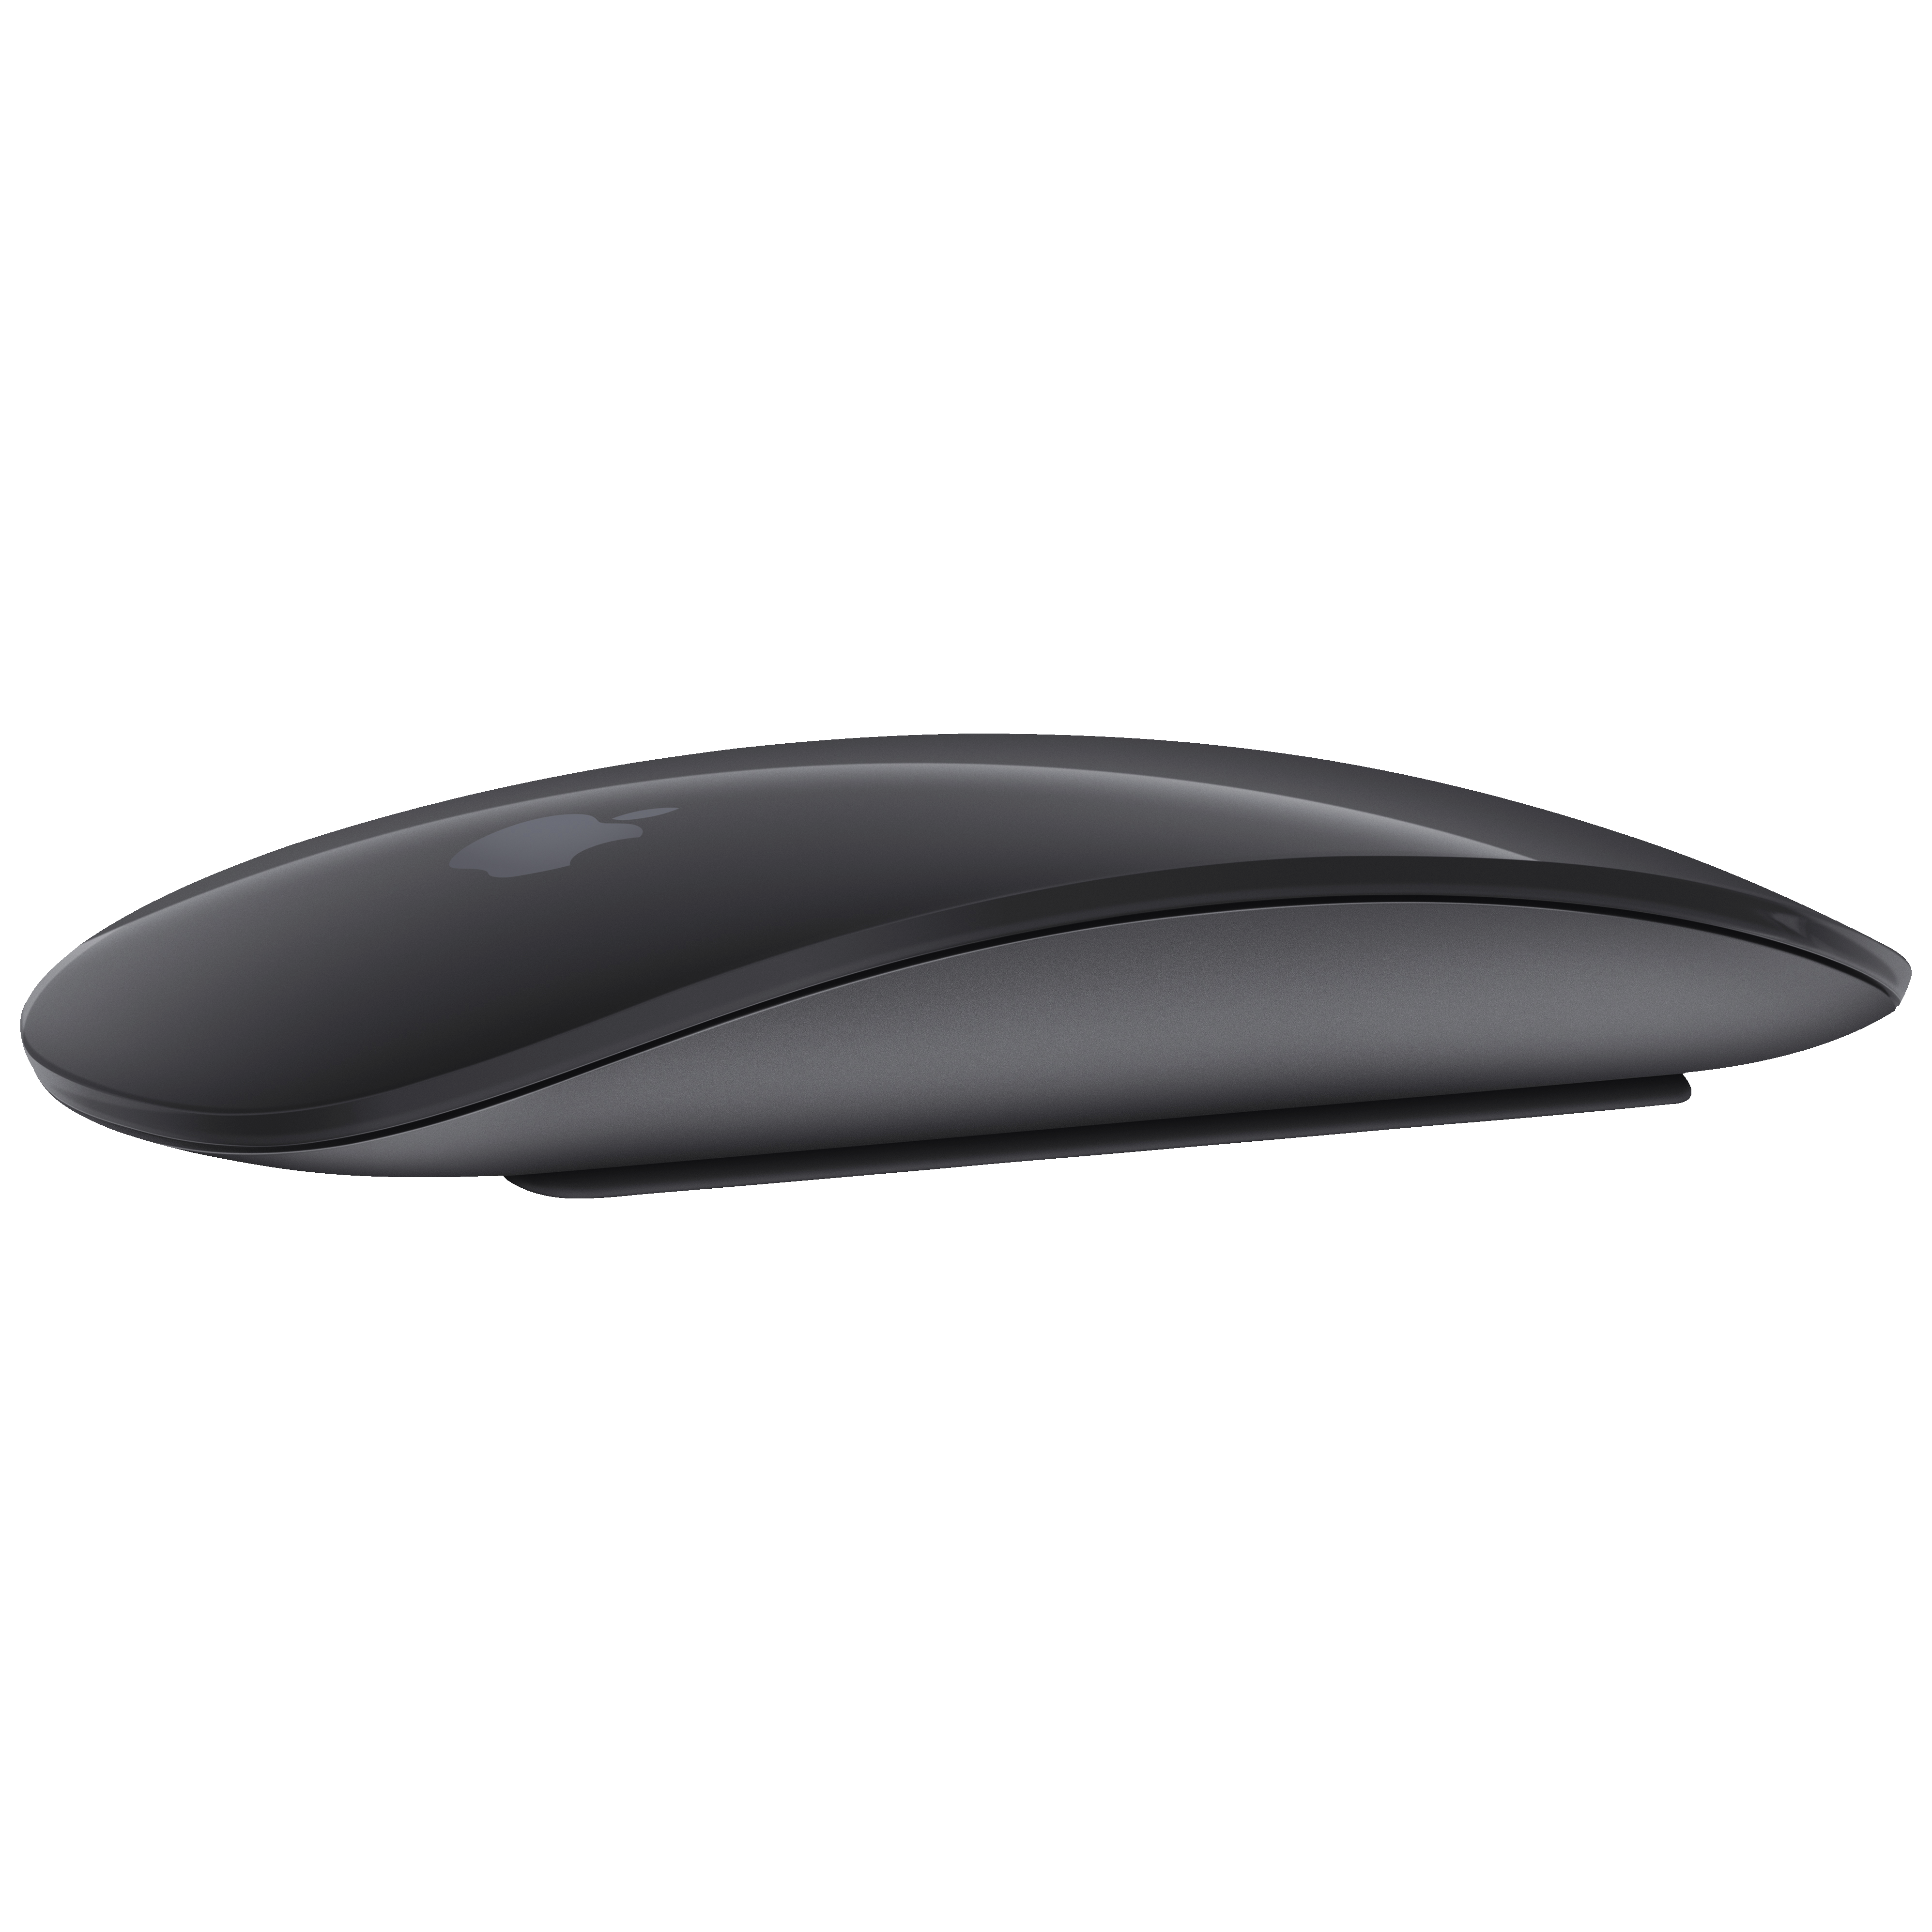 Apple Magic Mouse 2 (rymdgrå) - Datormus - Elgiganten